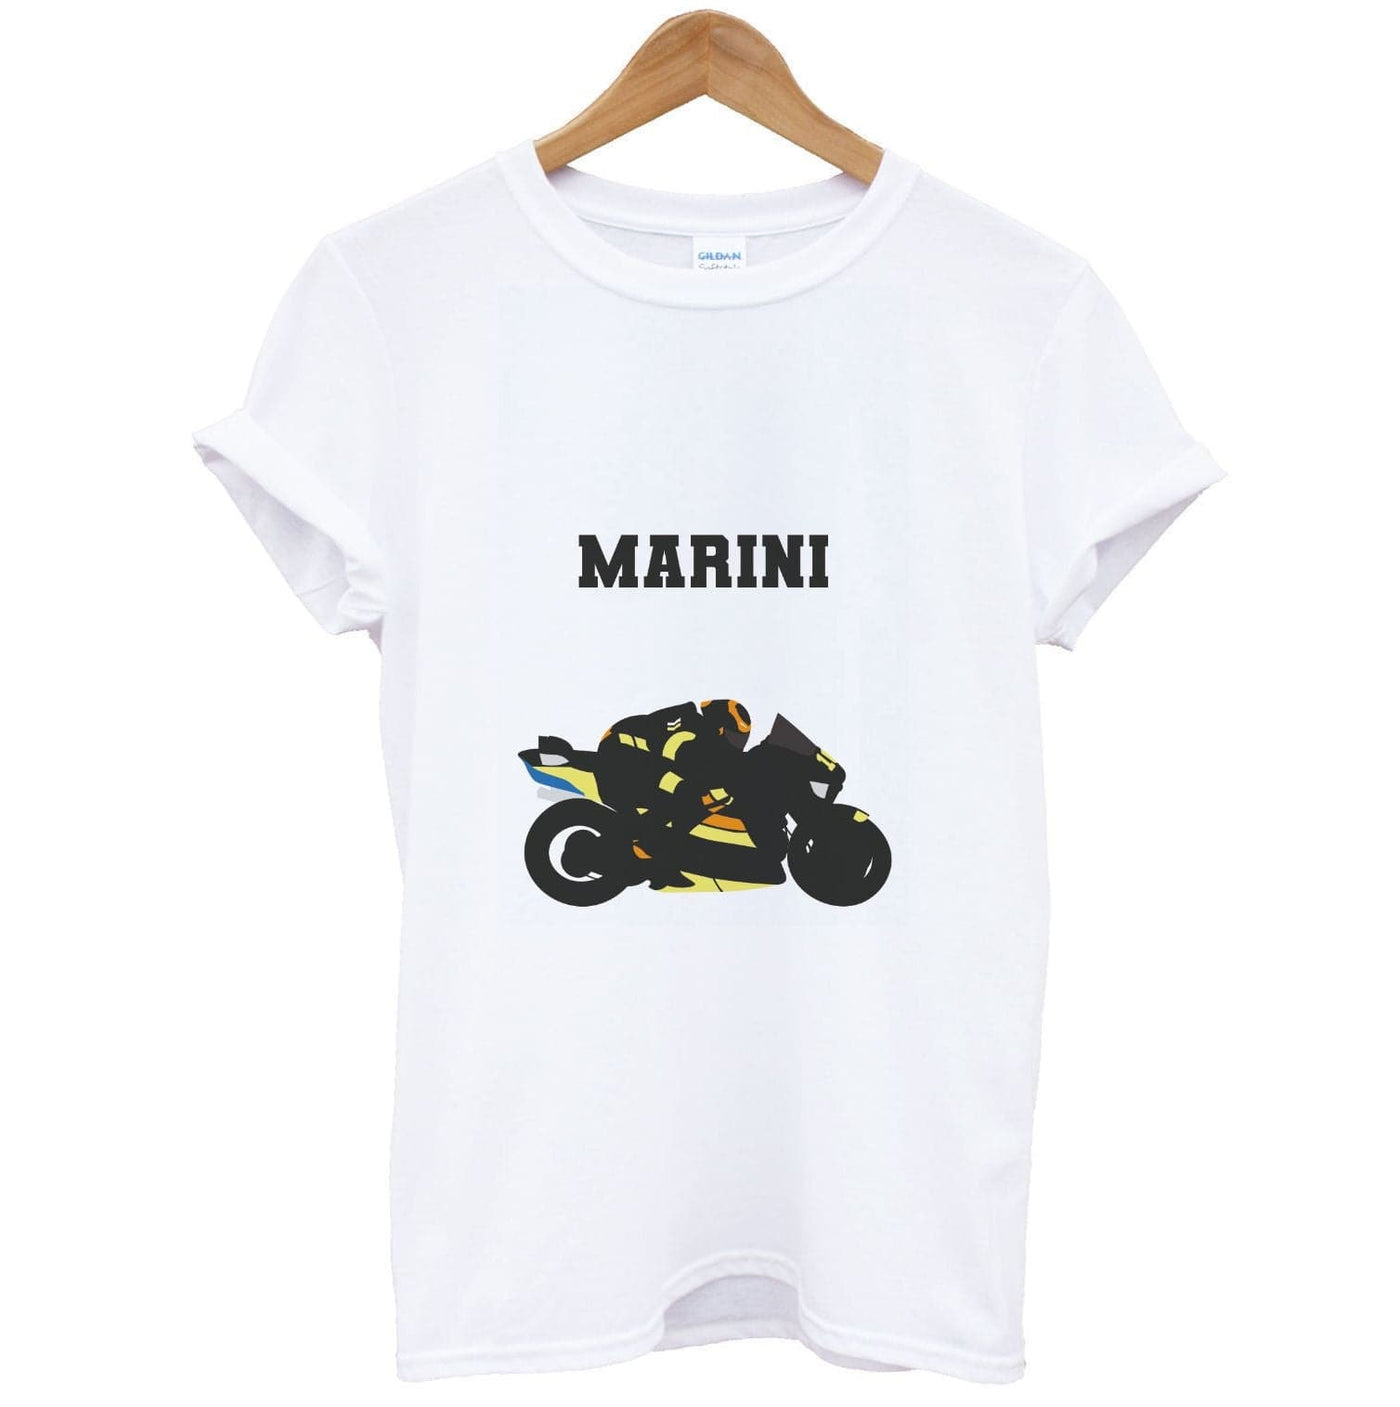 Marini - Moto GP T-Shirt